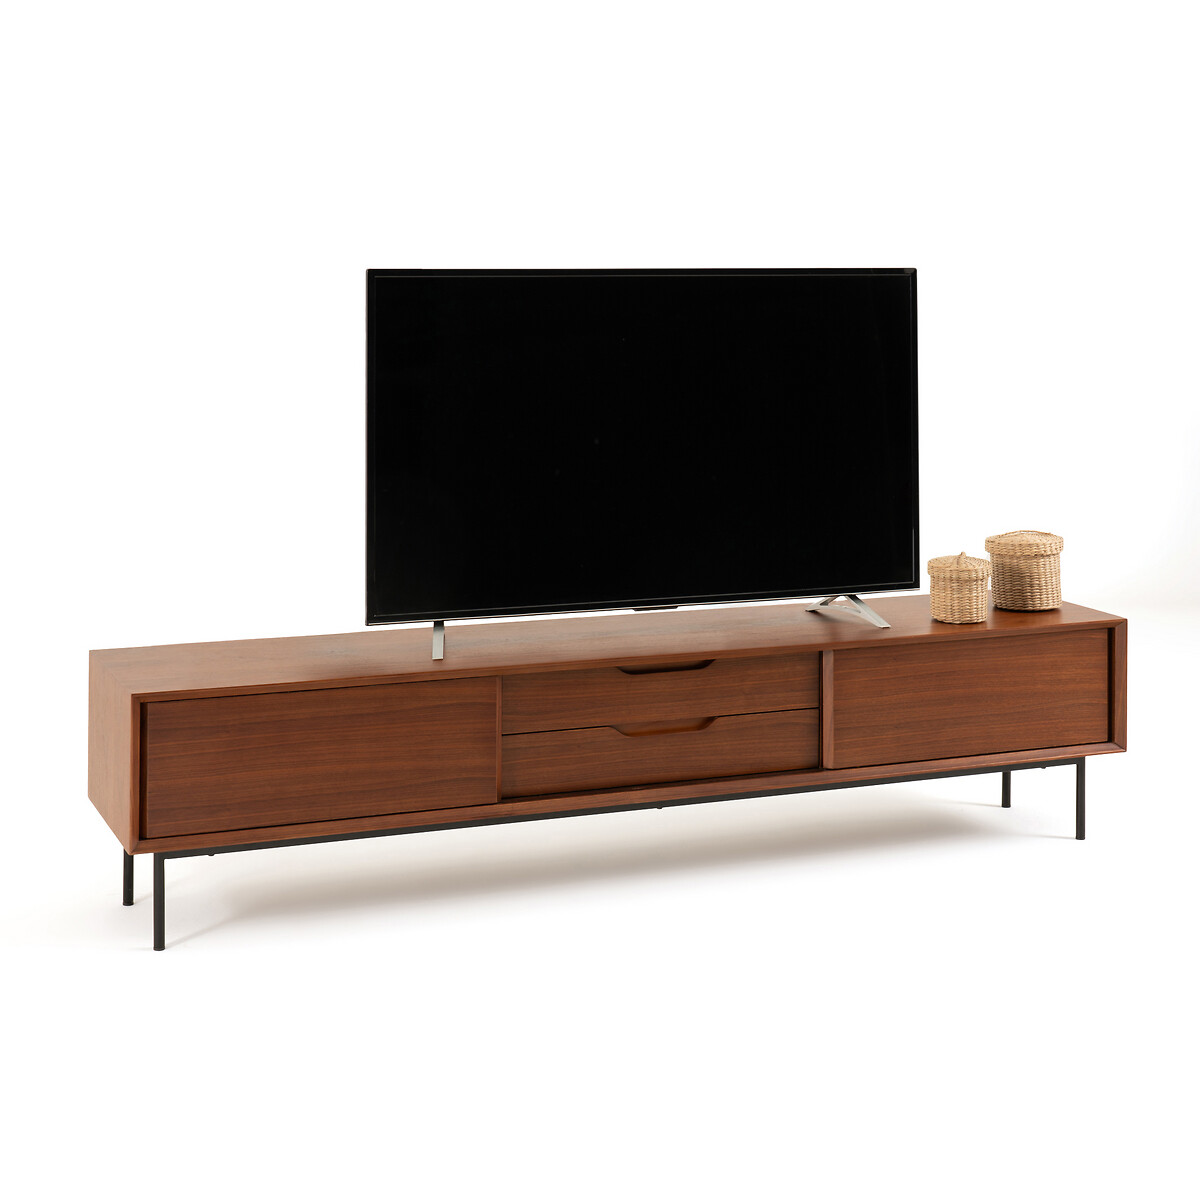 Tv-meubel met opberging in noyeto La Interieurs | La Redoute